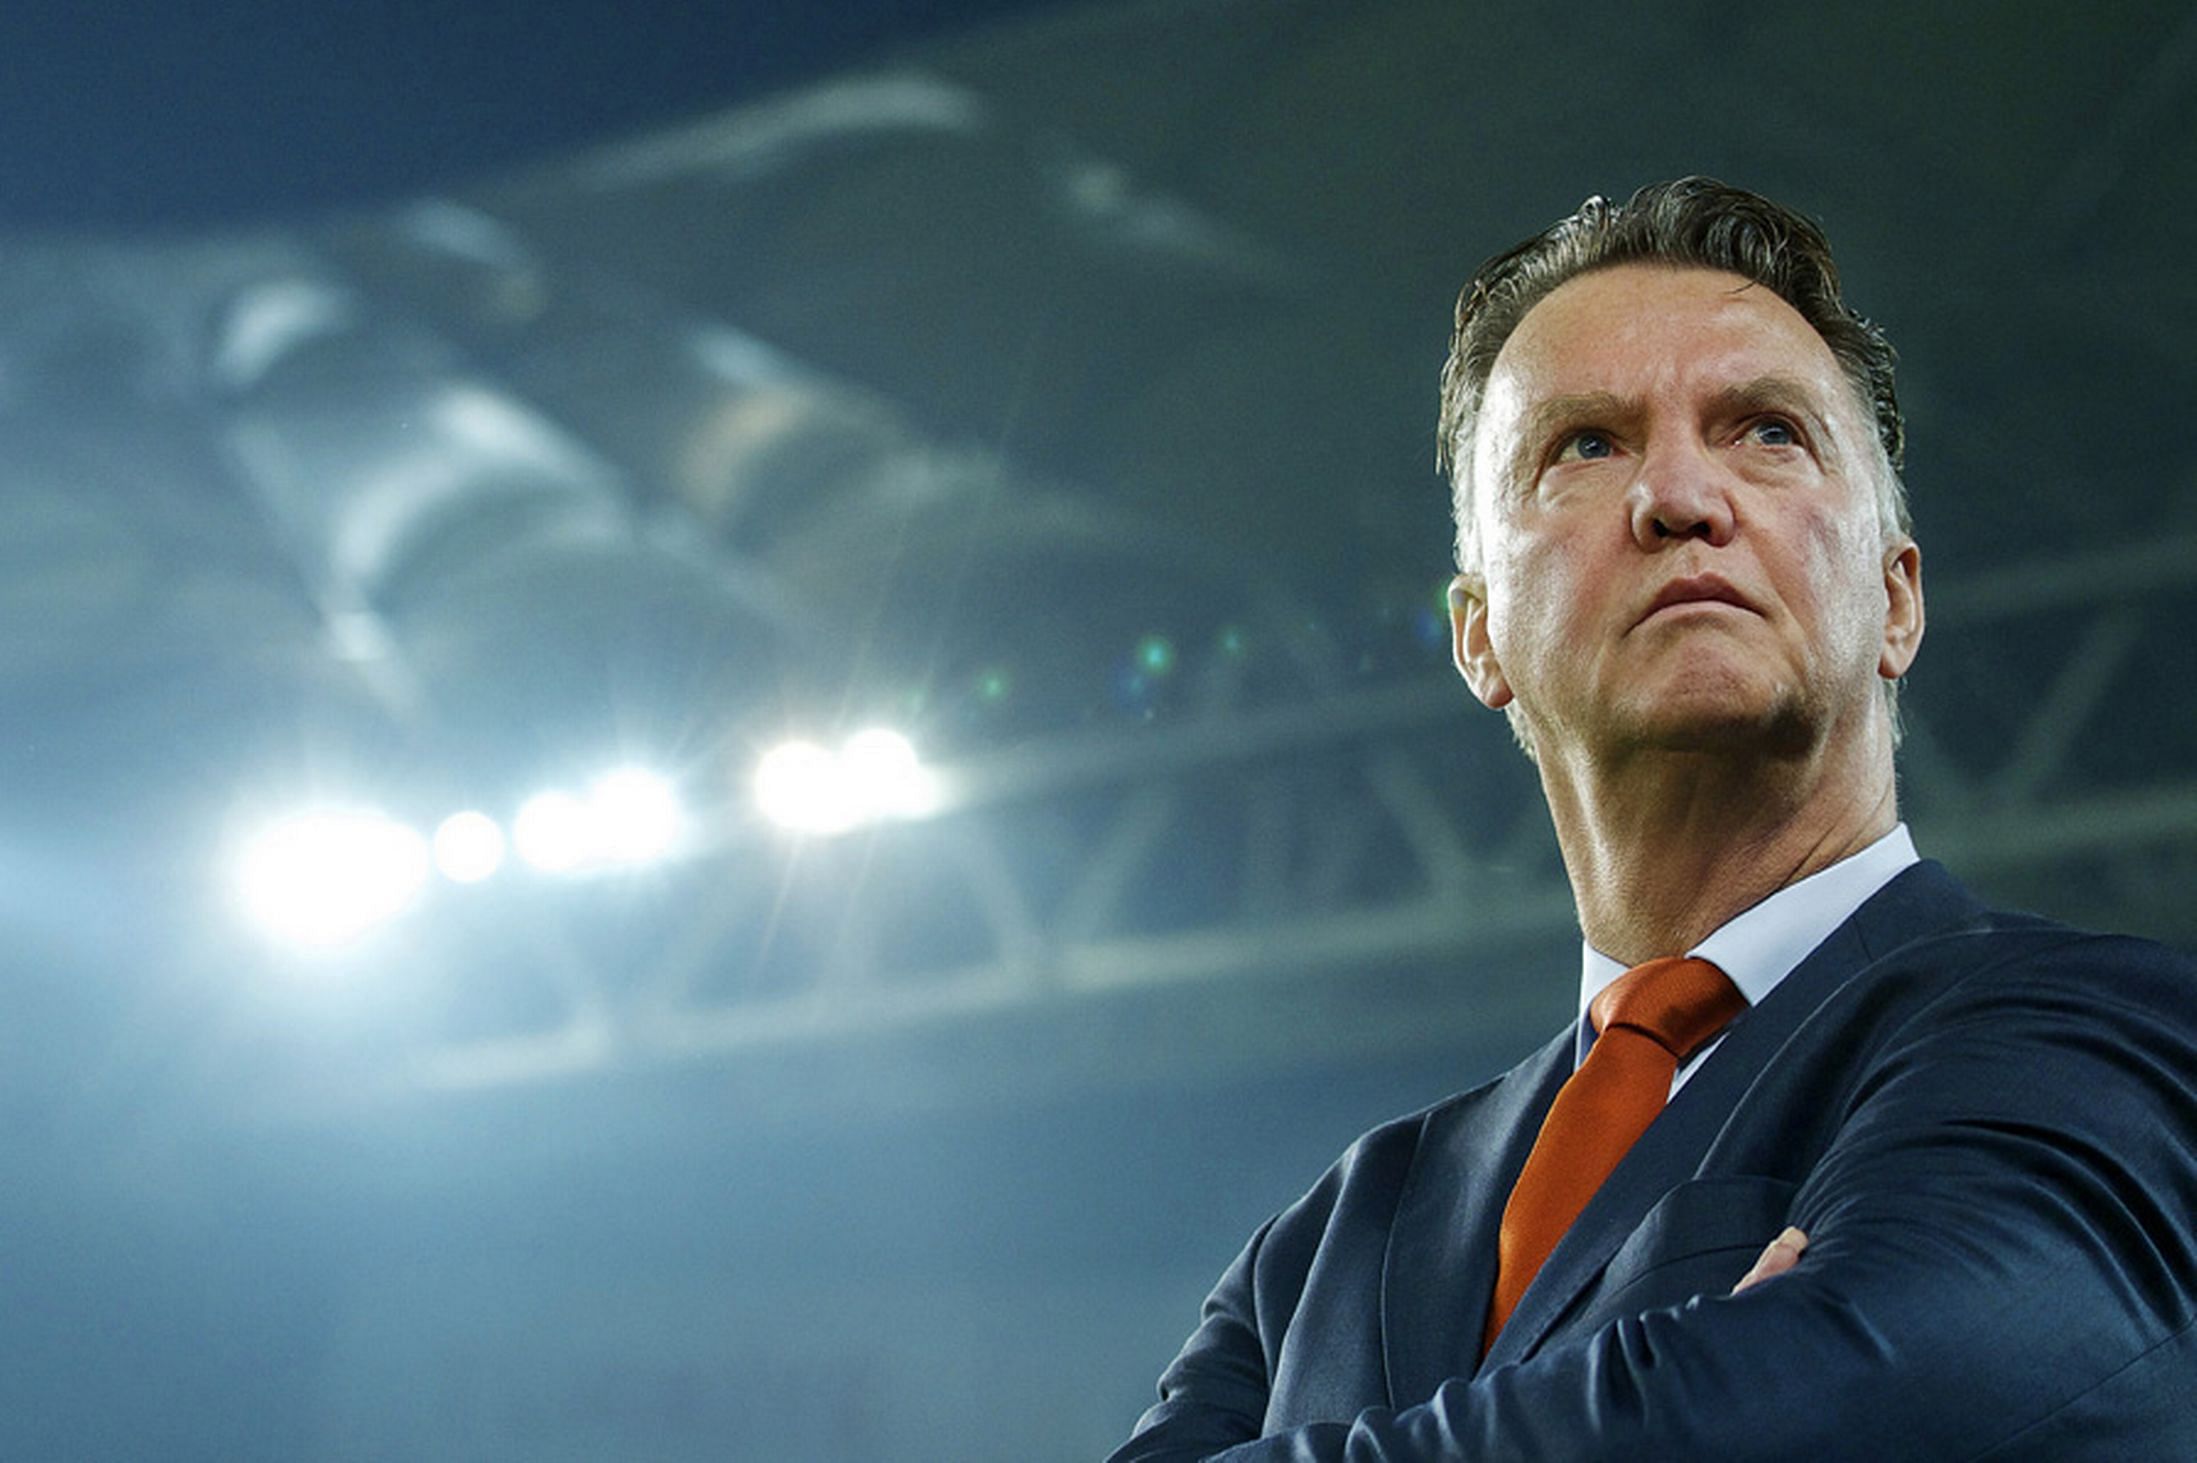 FIFA World Cup 2014: Outgoing Netherlands coach Louis van Gaal wants